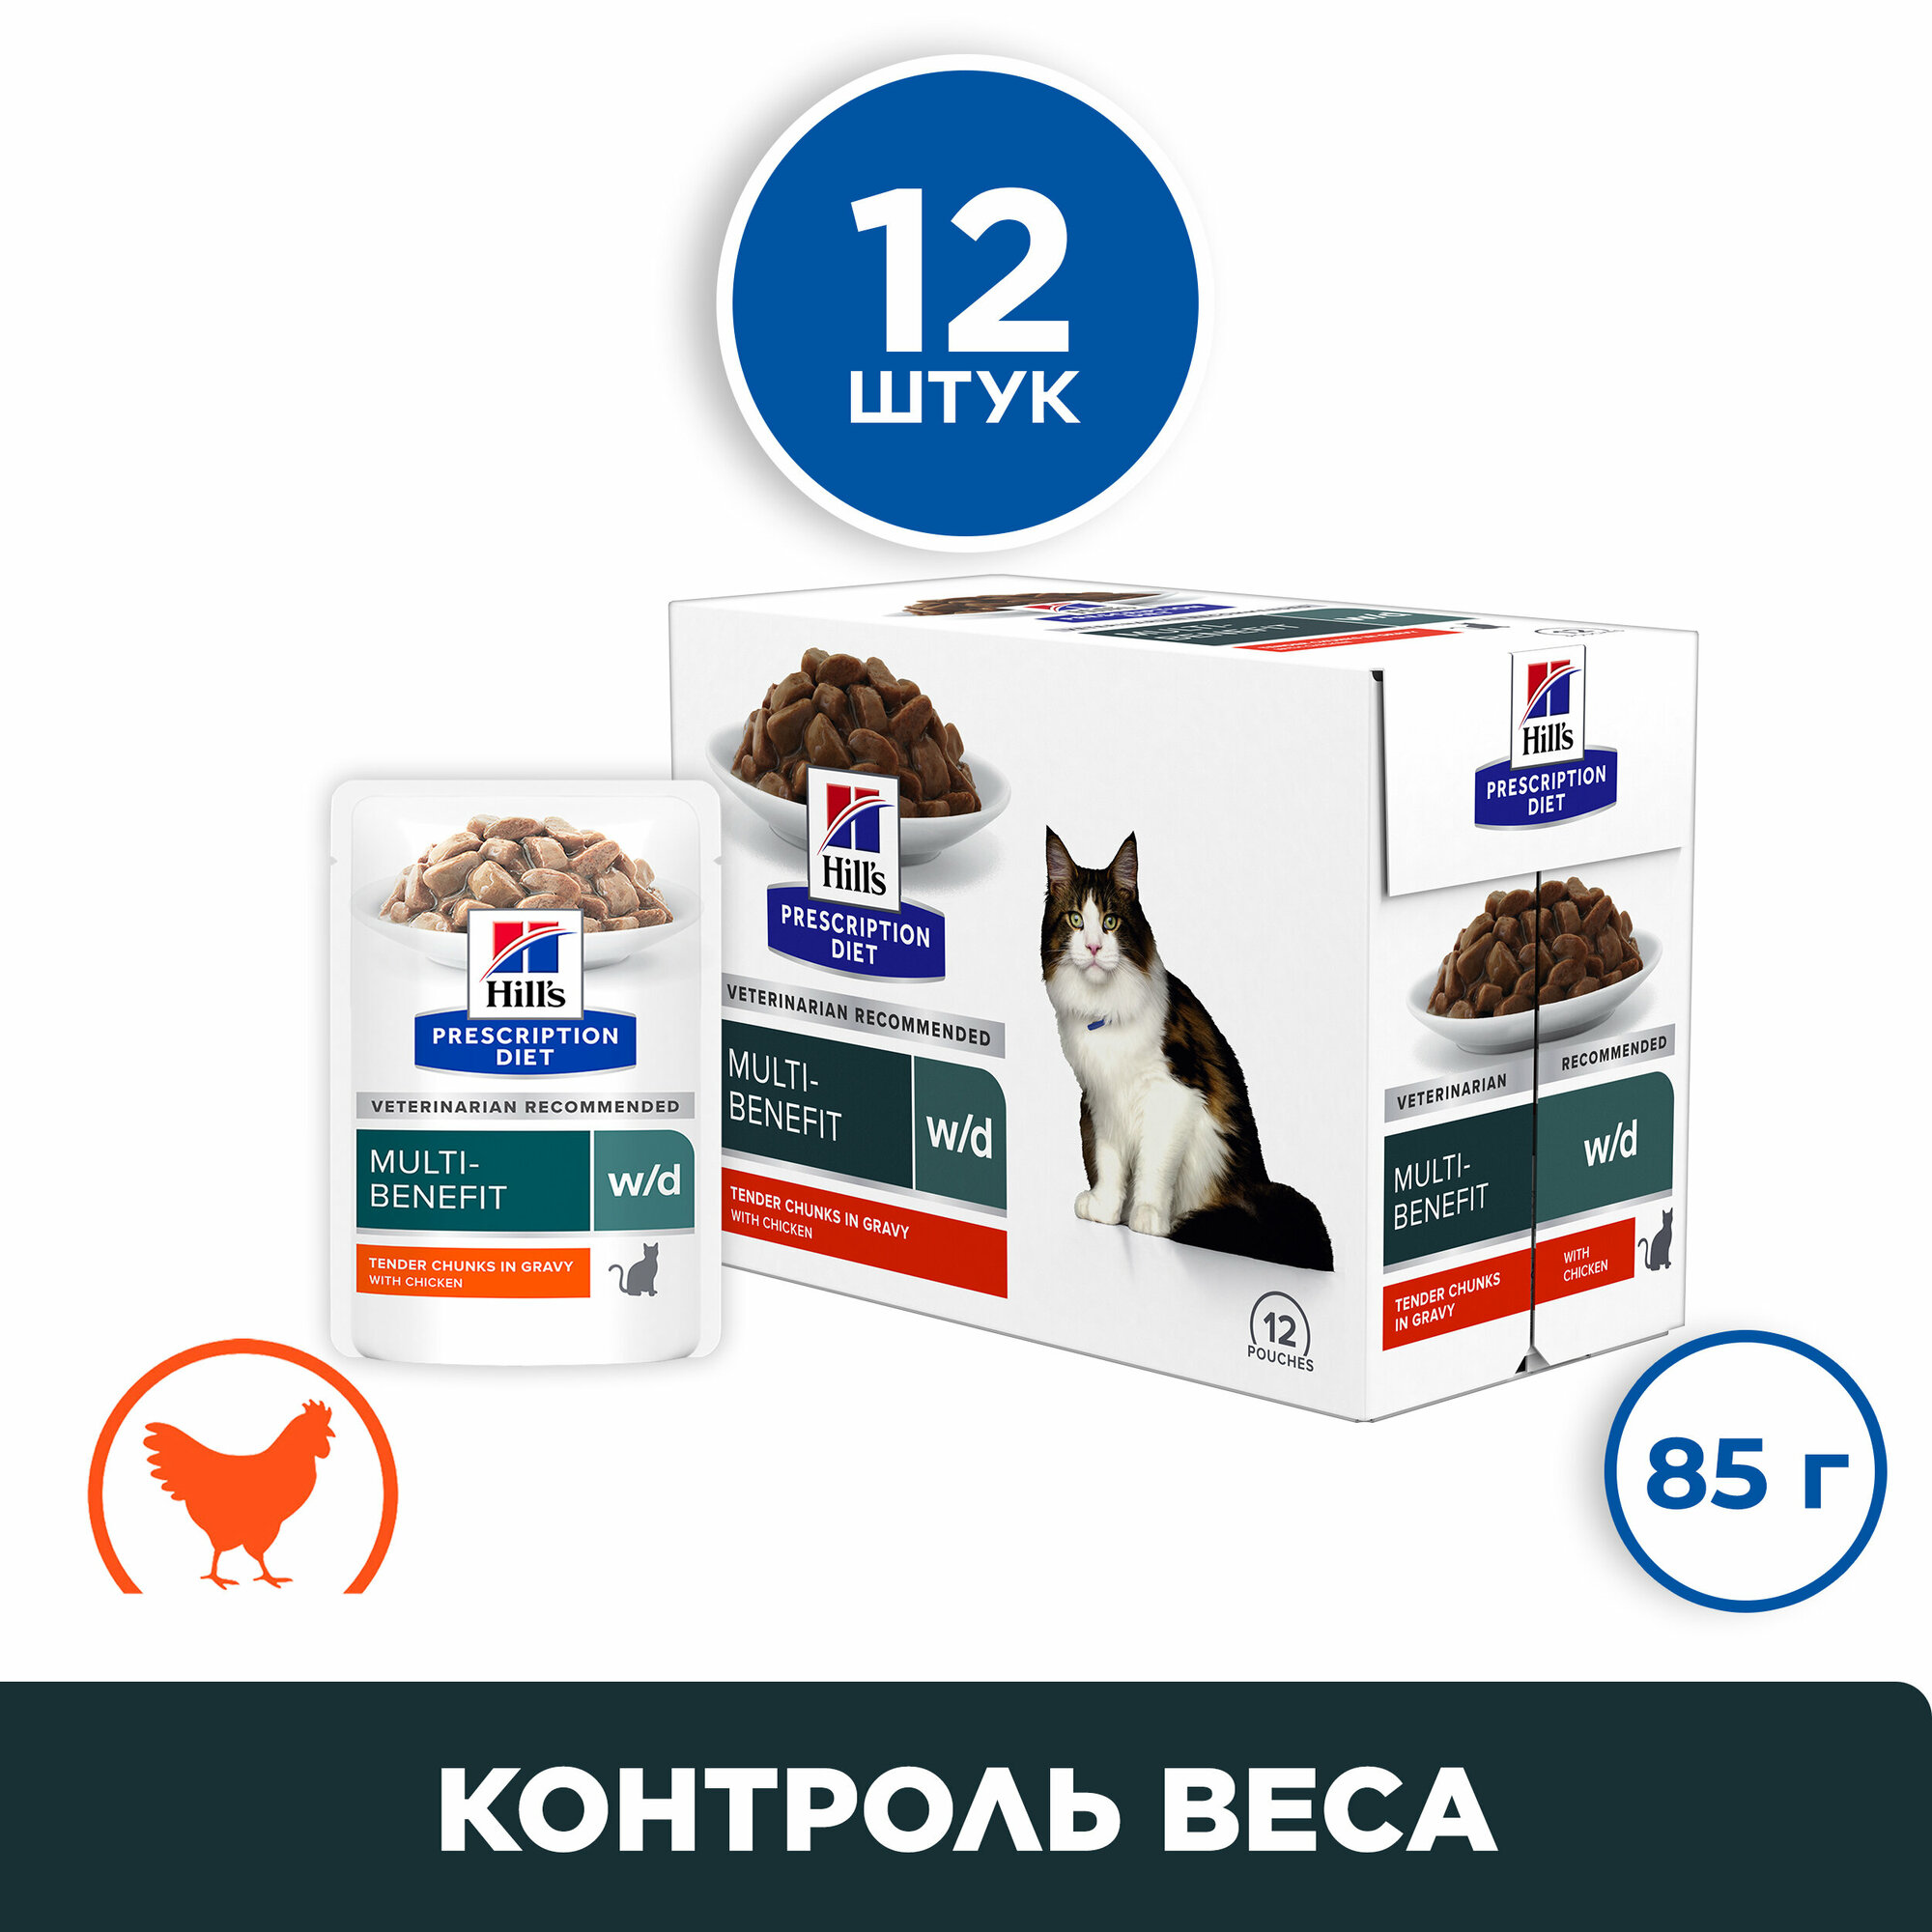 Hill's Prescription Diet w/d Multi-Benefit пауч для кошек при сахарном диабете Курица, 85 г. упаковка 12 шт